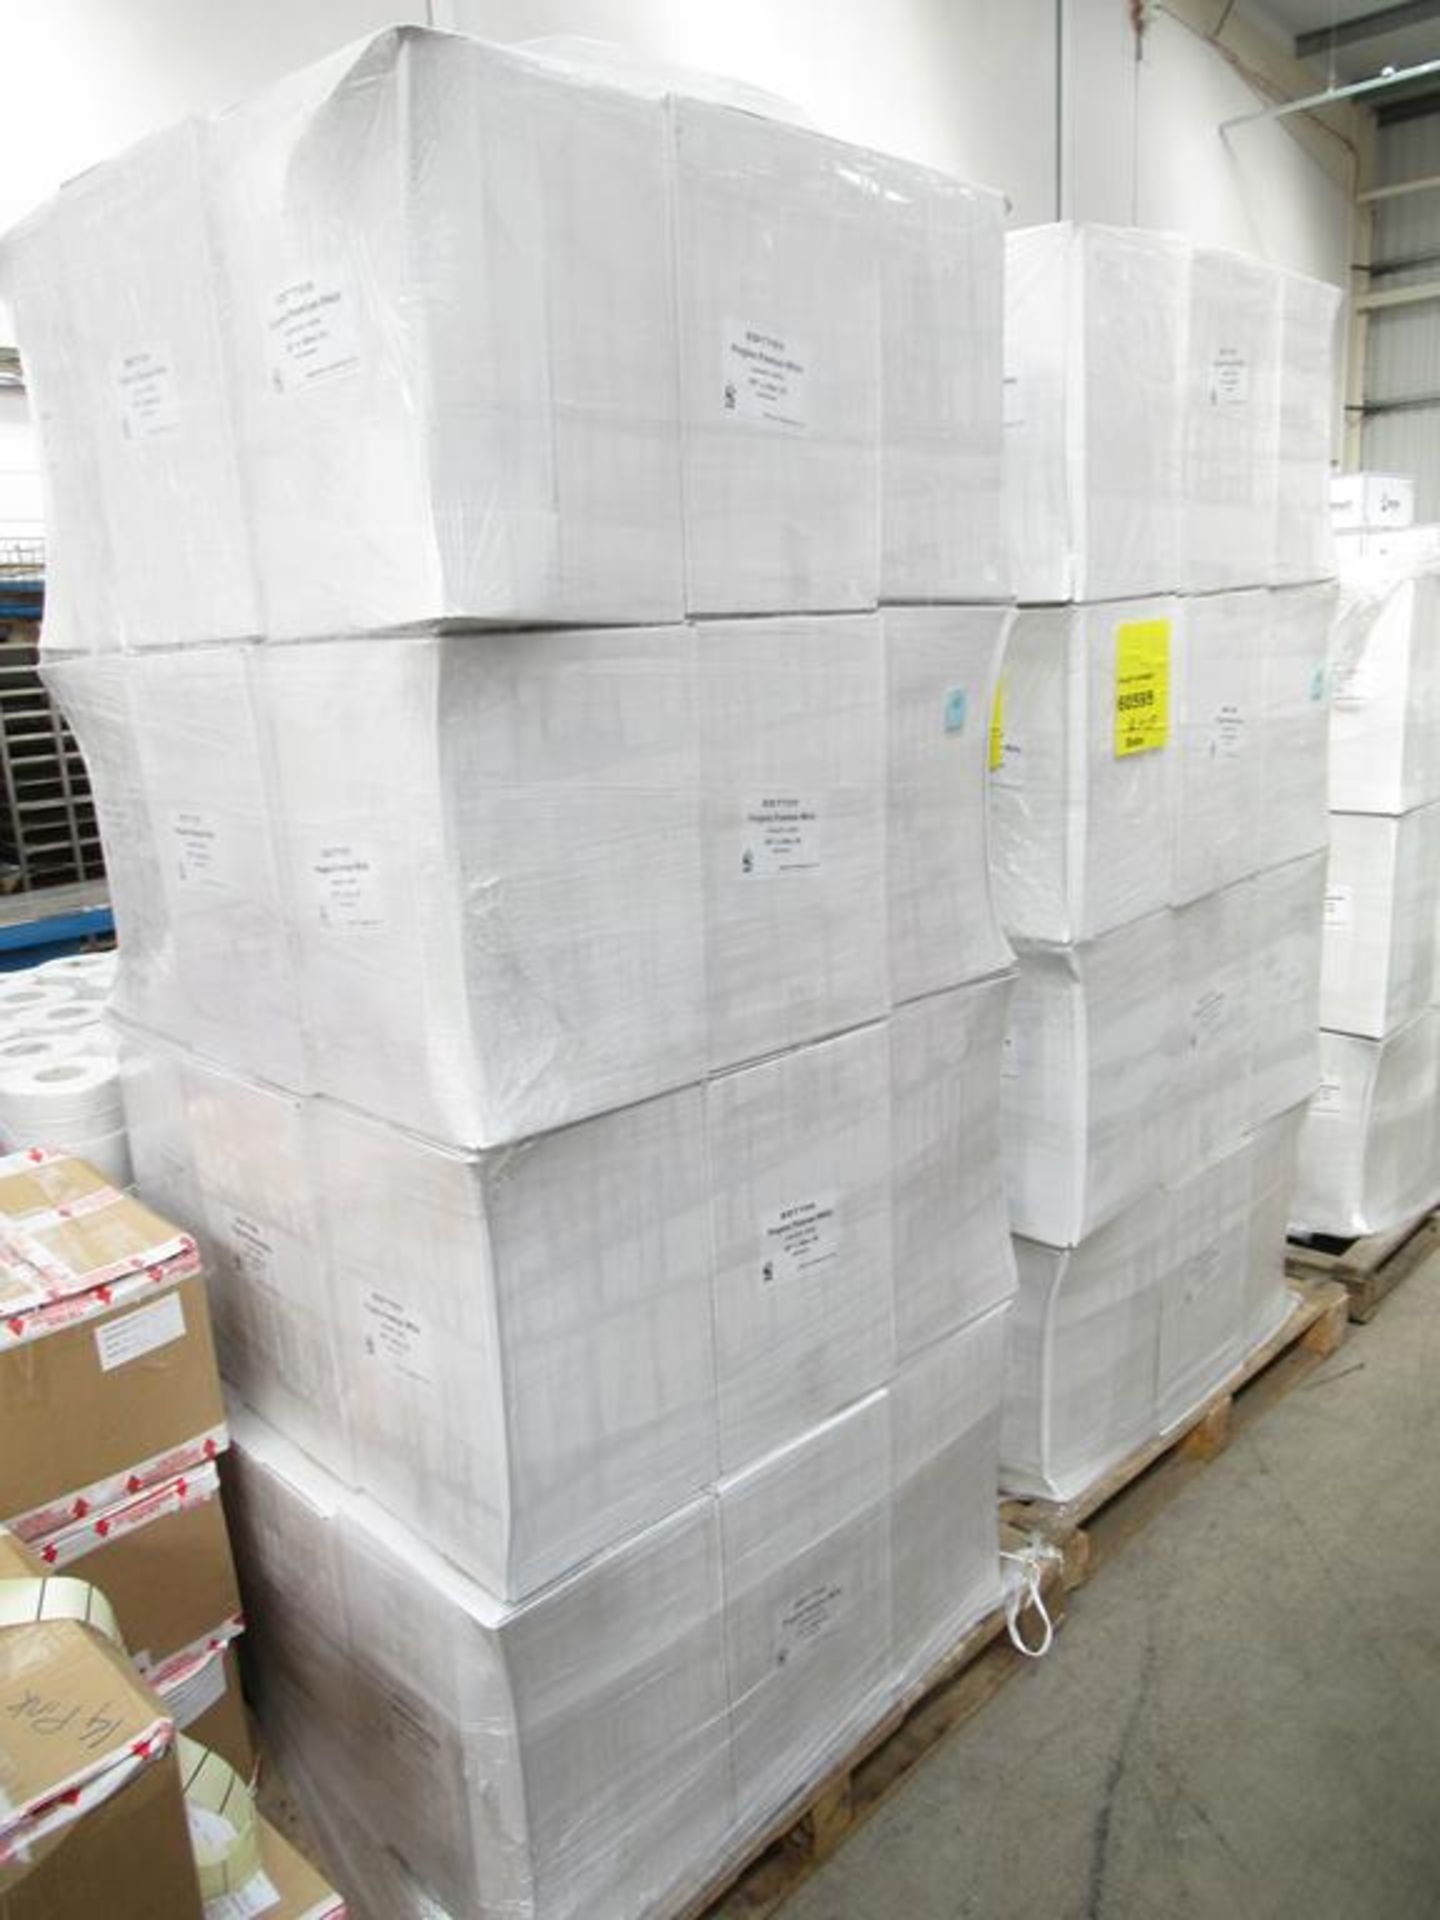 Pallet to contain 36 boxes of Progena Premium White Couch Rolls (20" x 40m per roll, 9 rolls per box